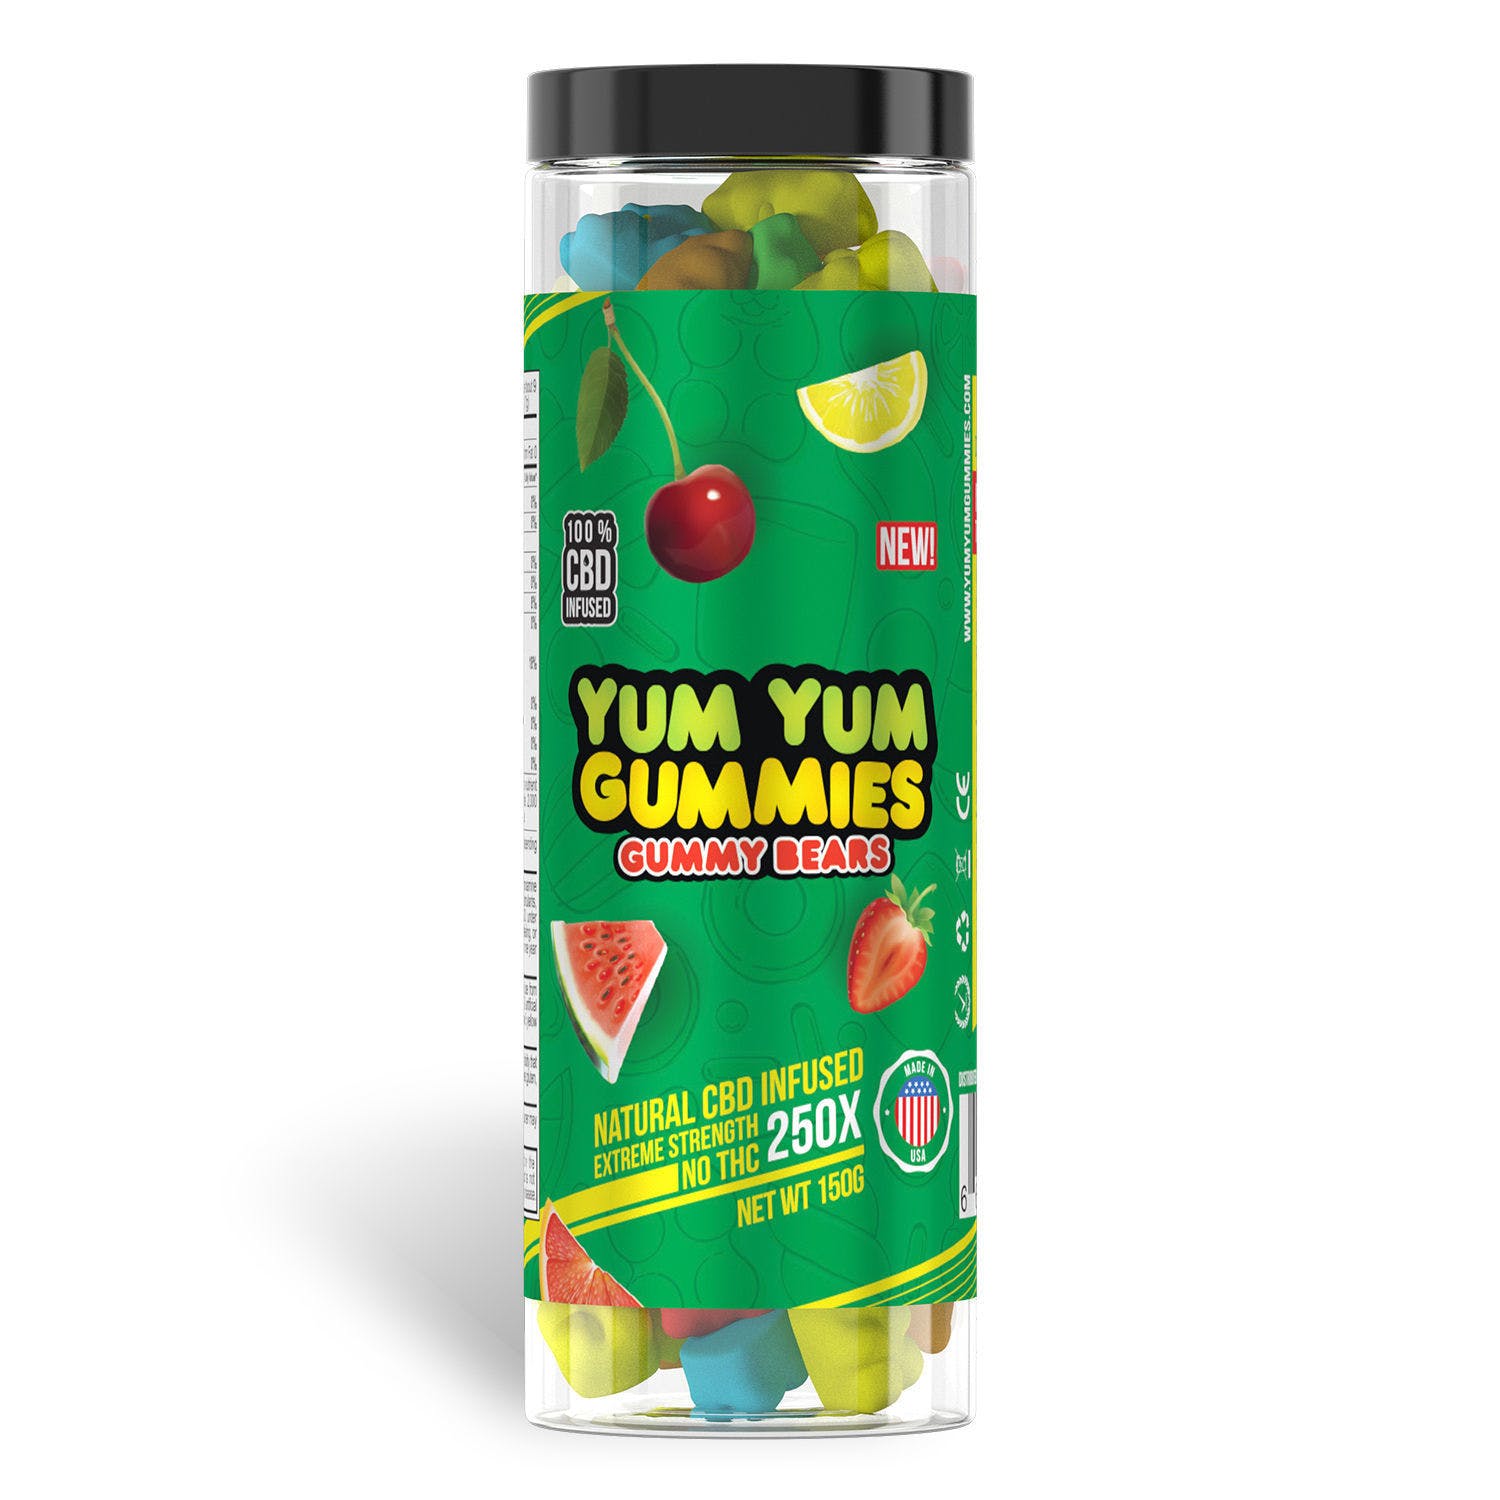 Yum Yum Gummies 250x - CBD Infused Gummy Bears